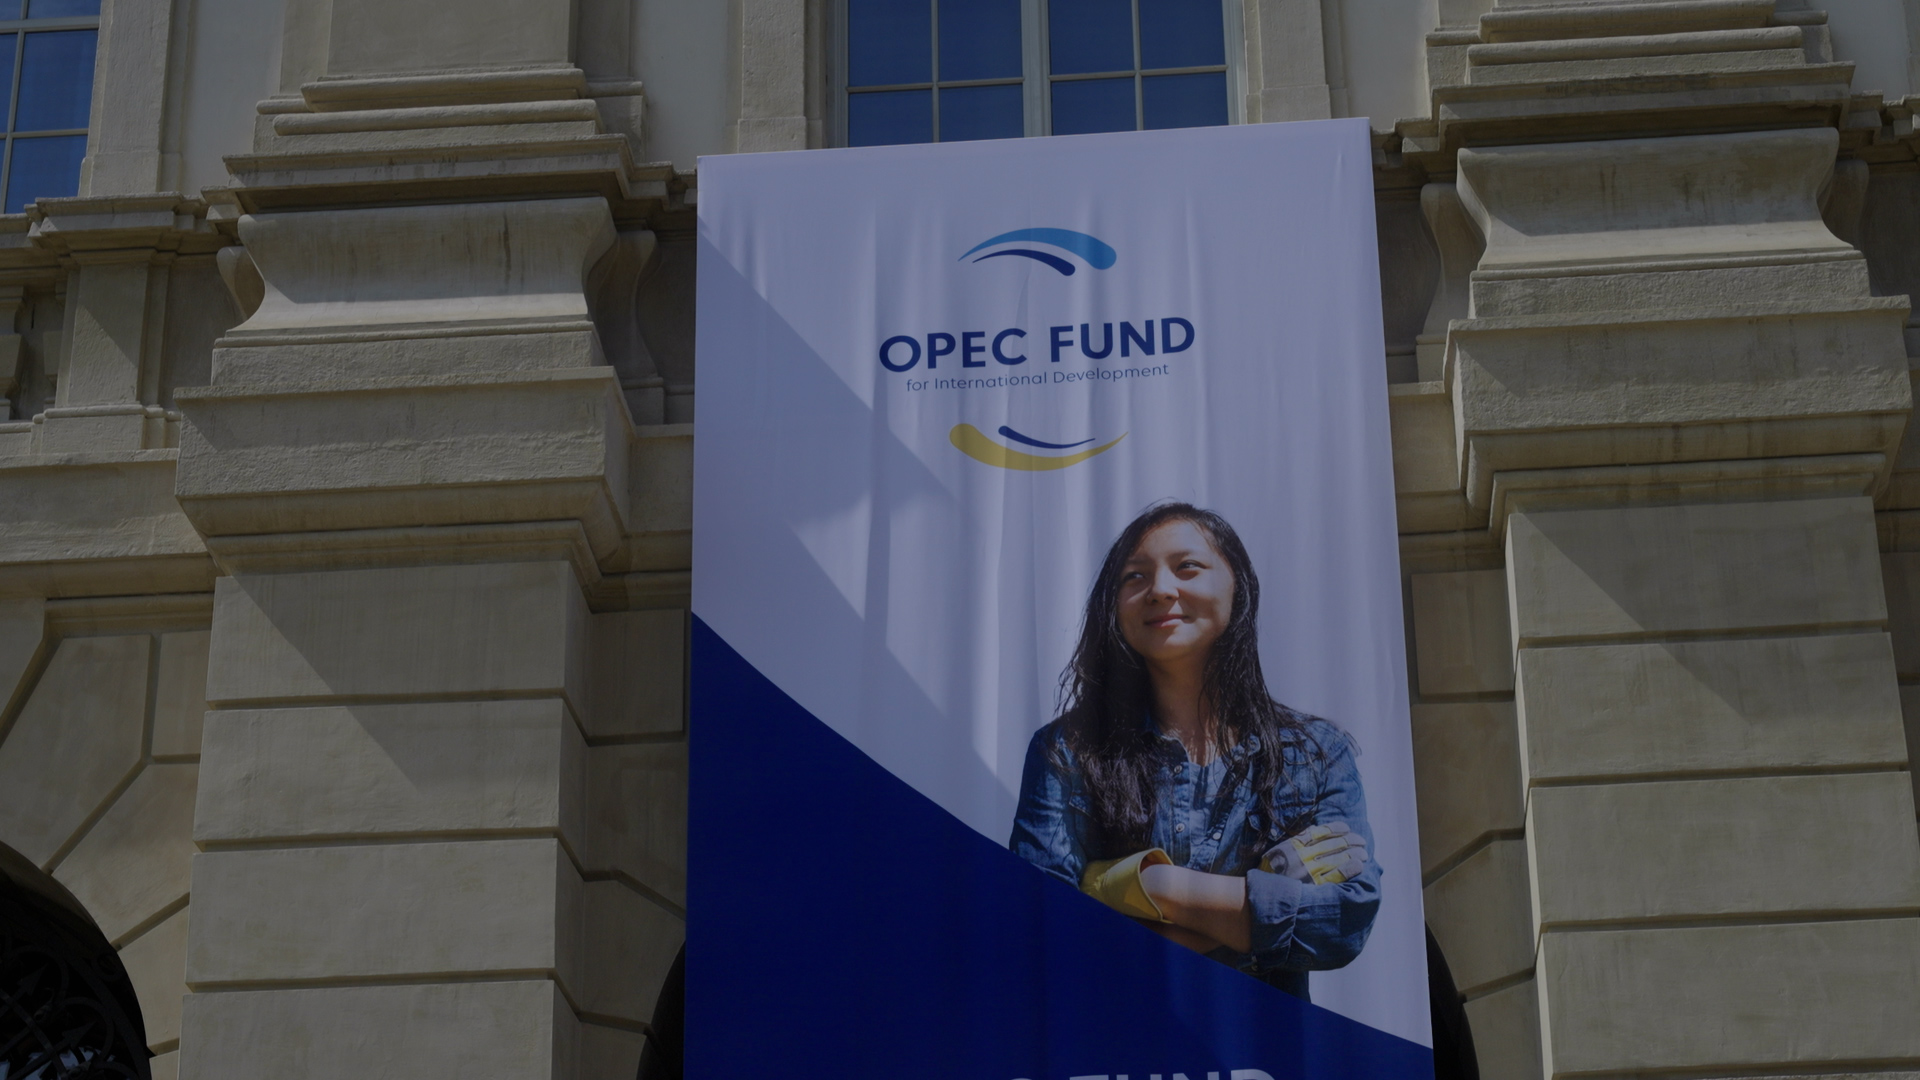 National ministers and international organization leaders attended the second OPEC Fund forum at Vienna's Palais Liechtenstein. /Dworschak/CGTN